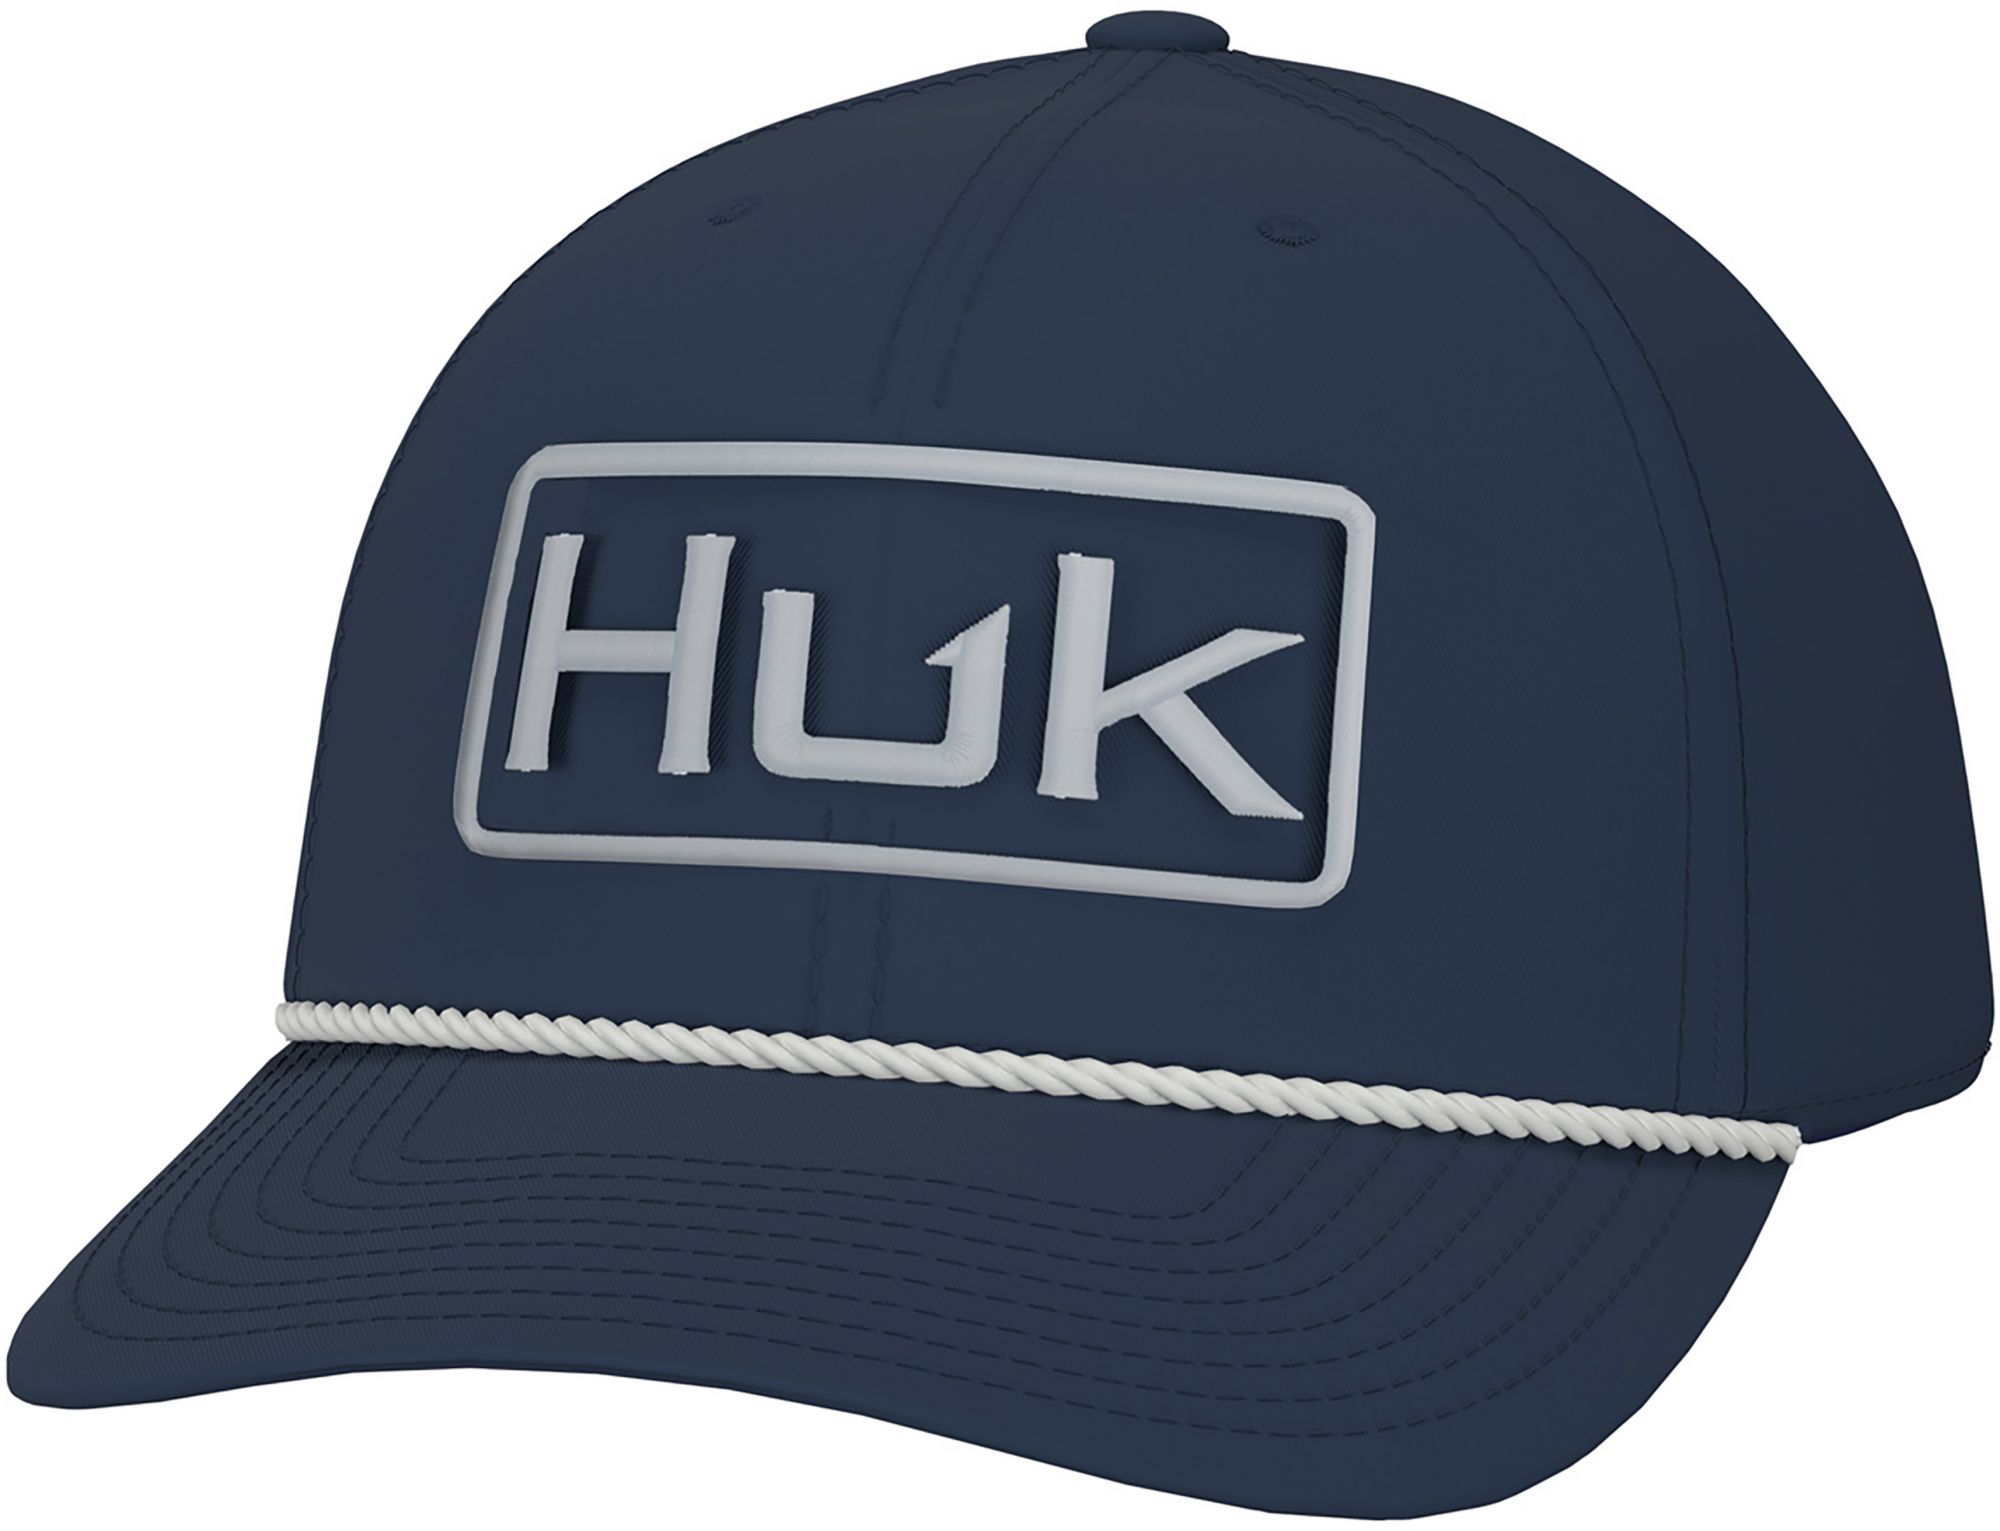 Huk Men's Captain Rope Trucker Hat